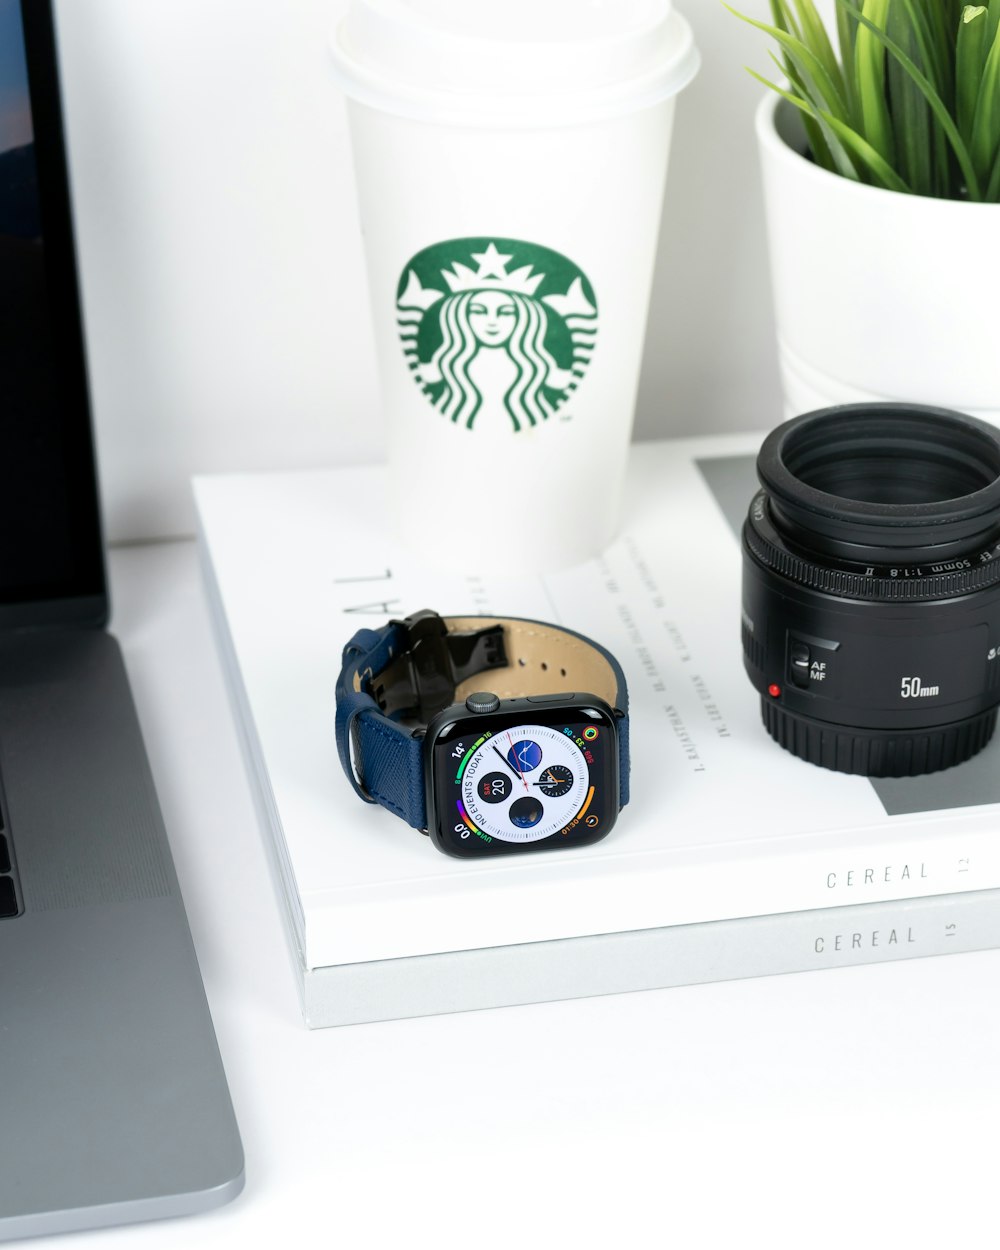 Starbucks coffee, black smart watch and black camera lens on white book